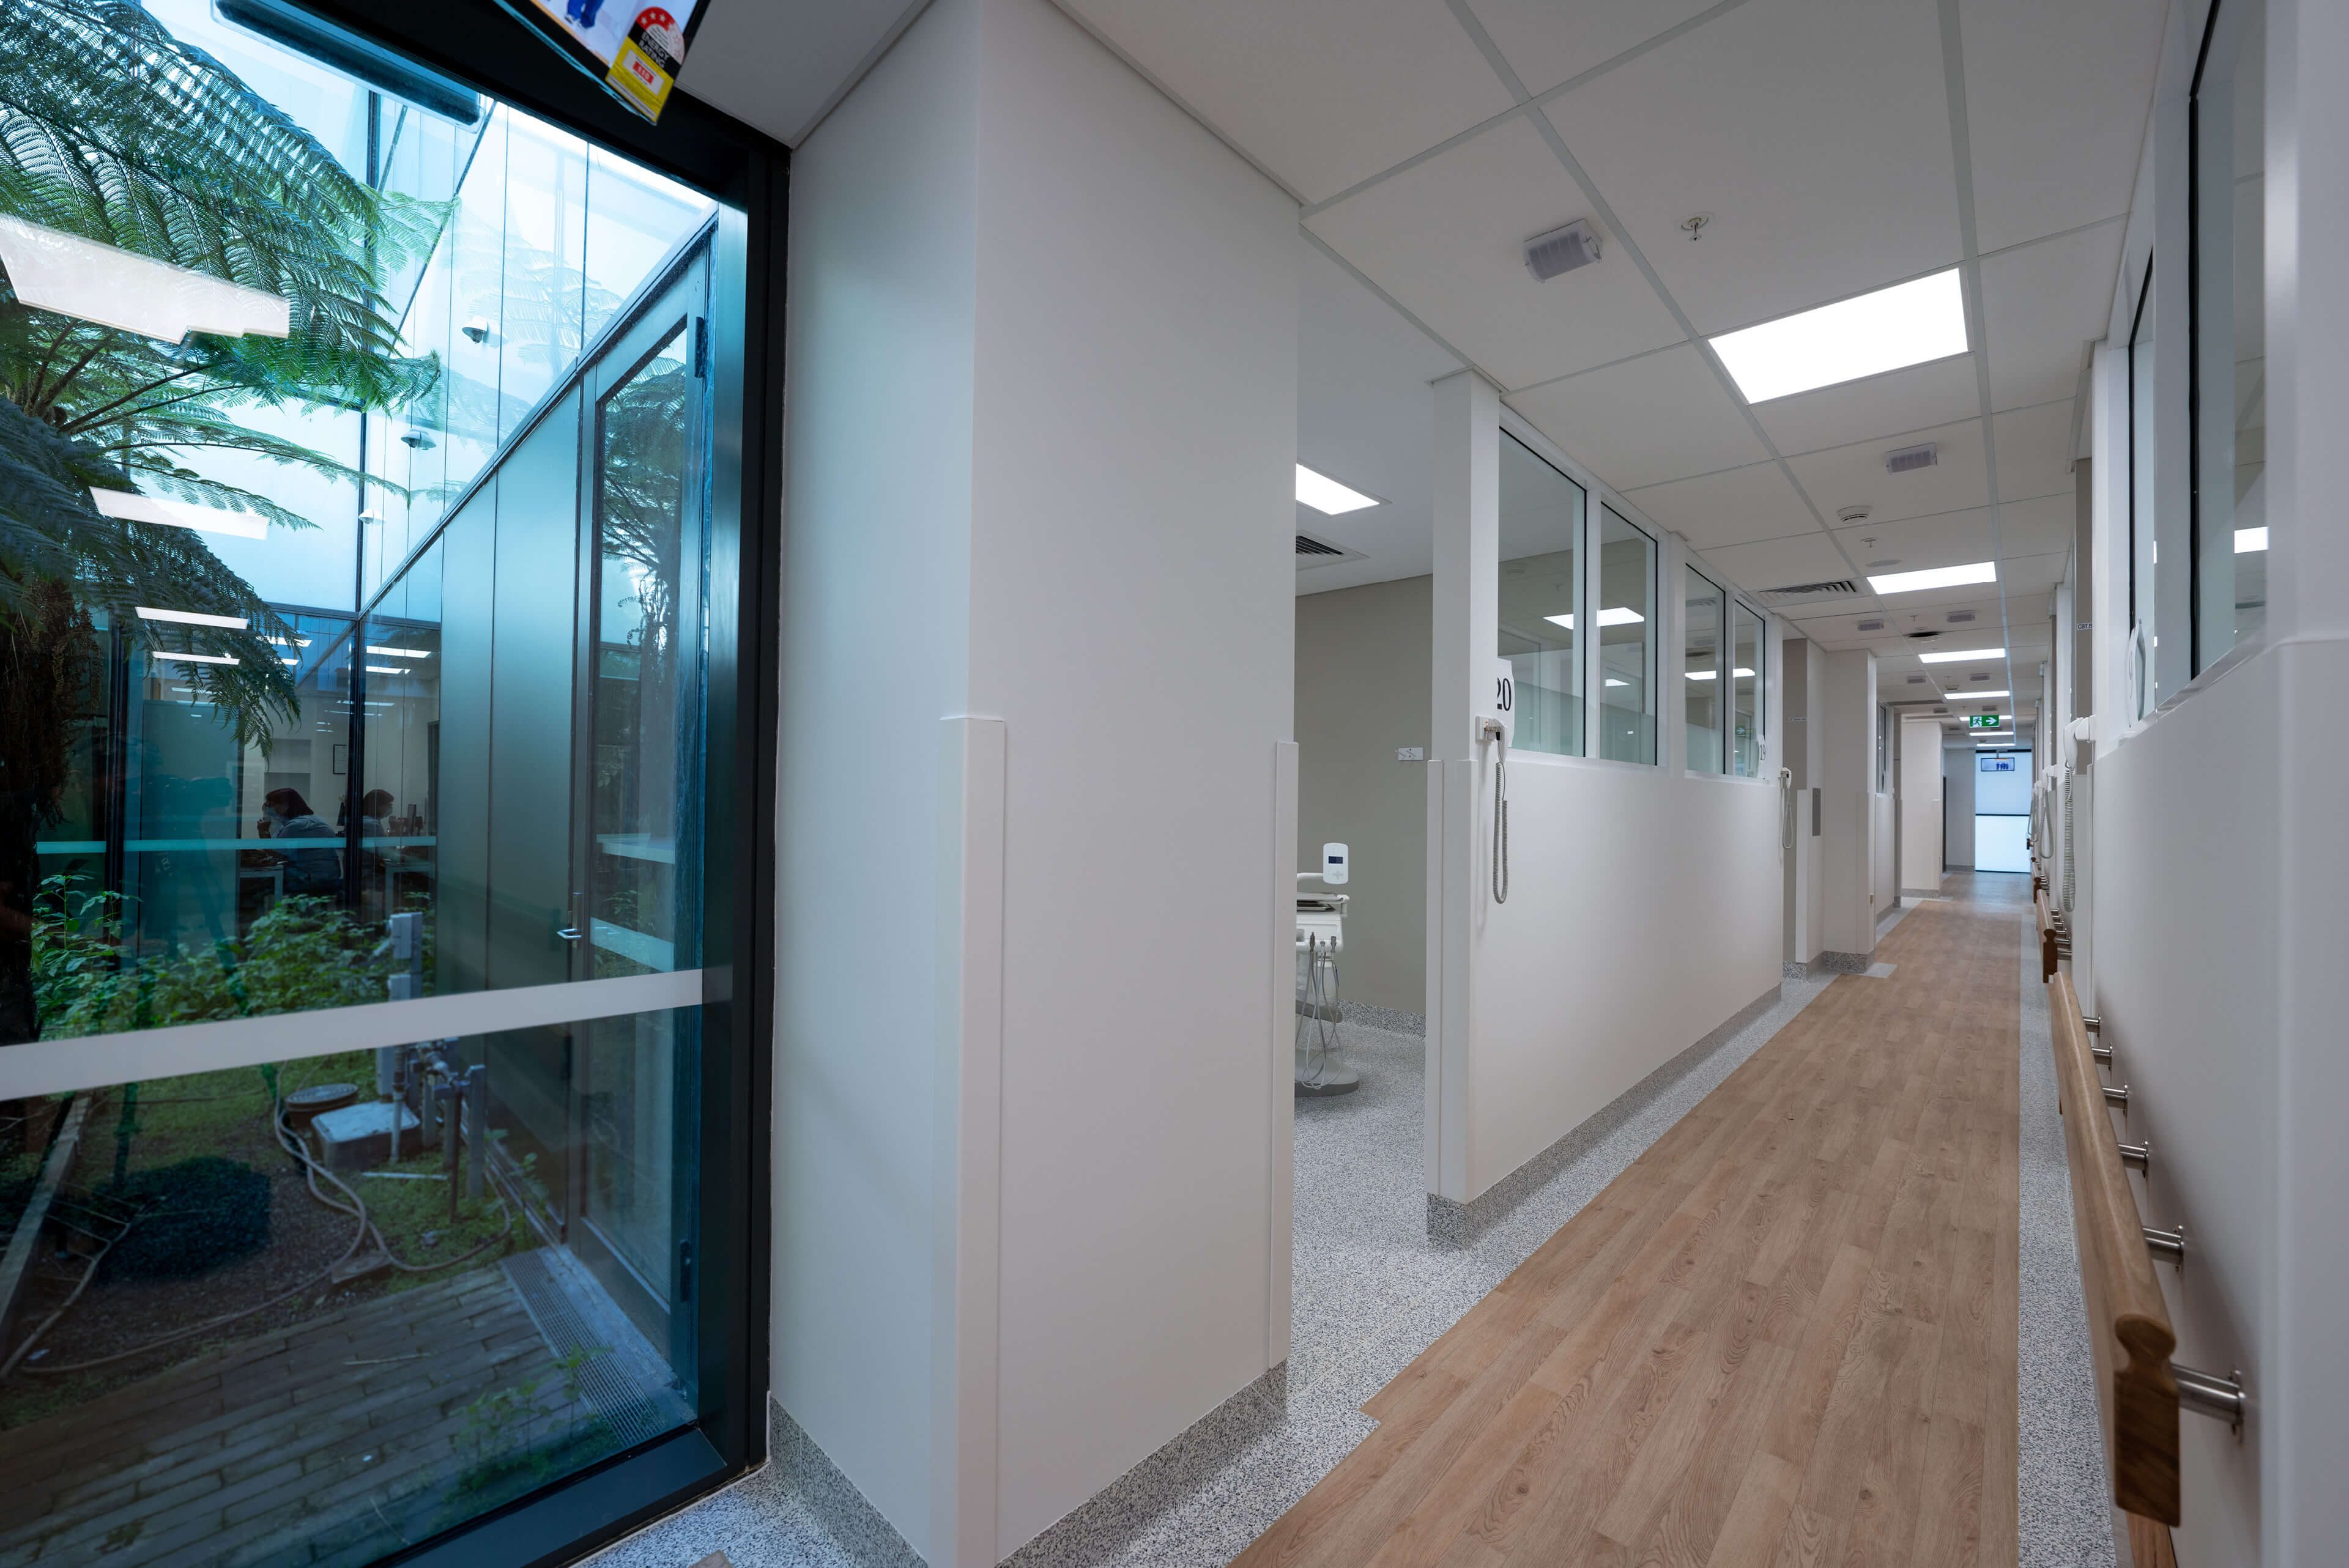 7 interior window campbelltown hospital refurbishment taylor construction refurbishment live environments